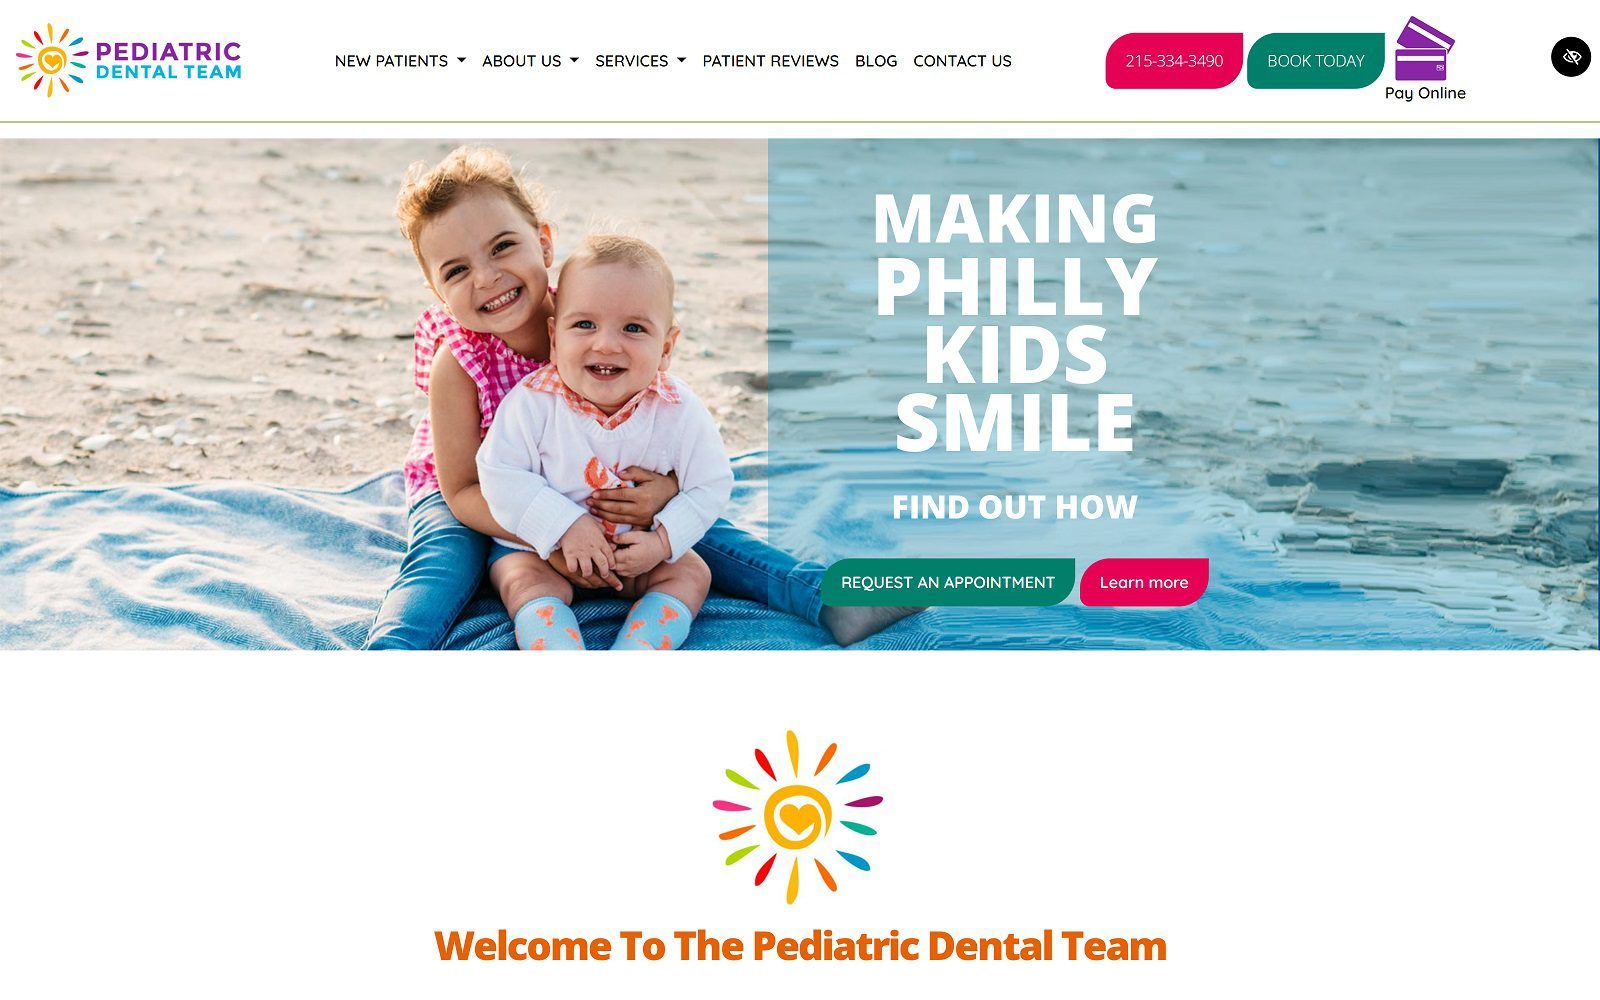 The screenshot of dr. John's pediatric dental team website